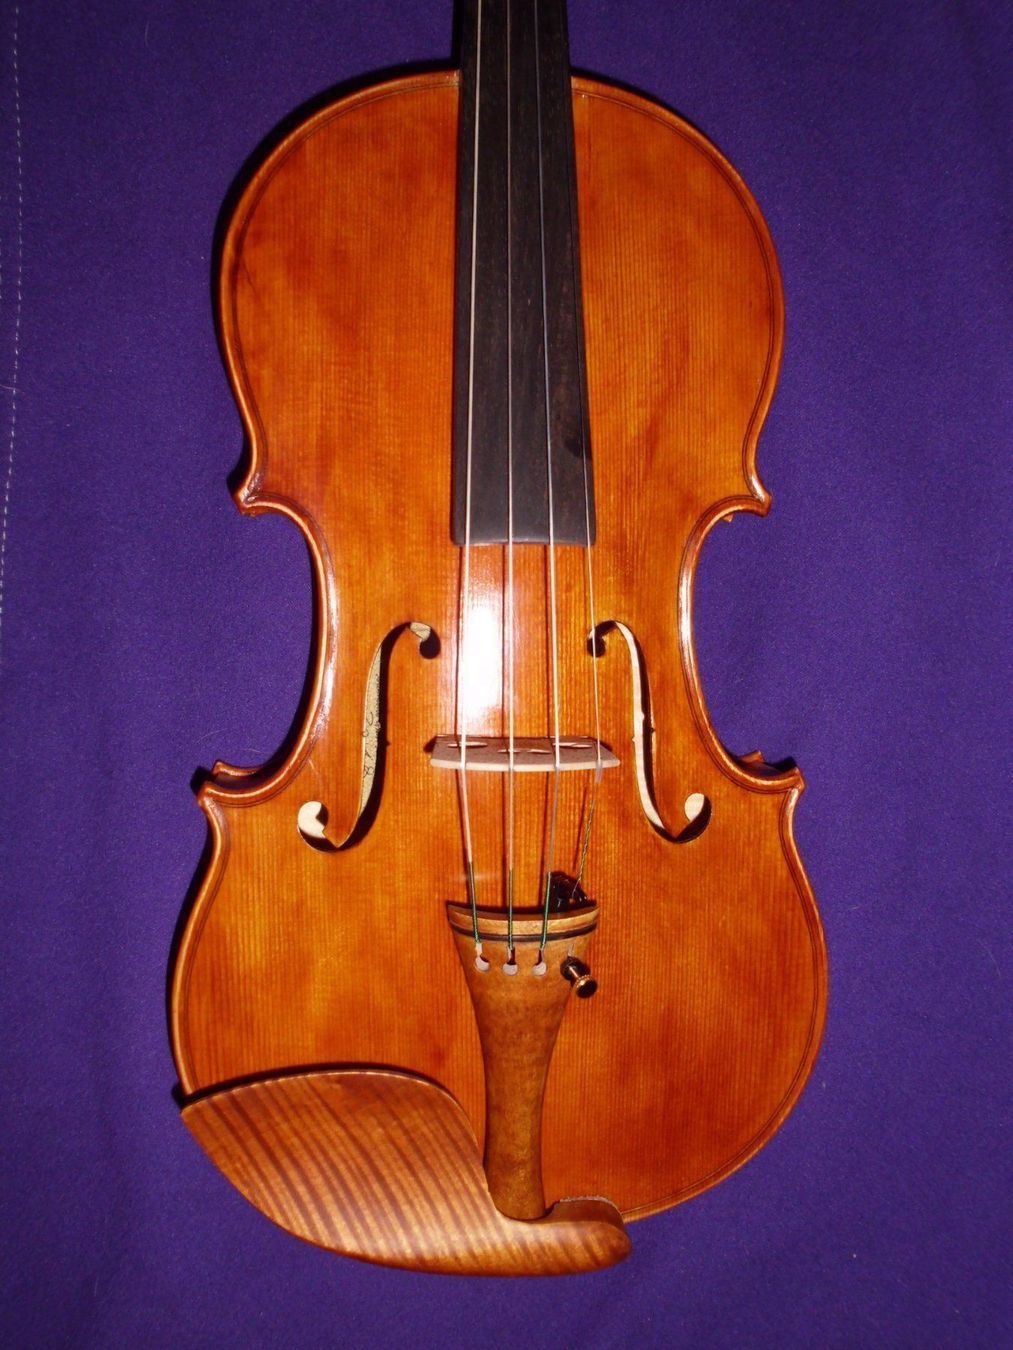 image-12563003-konzert-geige-violine-violon-violino-after-italie-xviii-16790.jpg